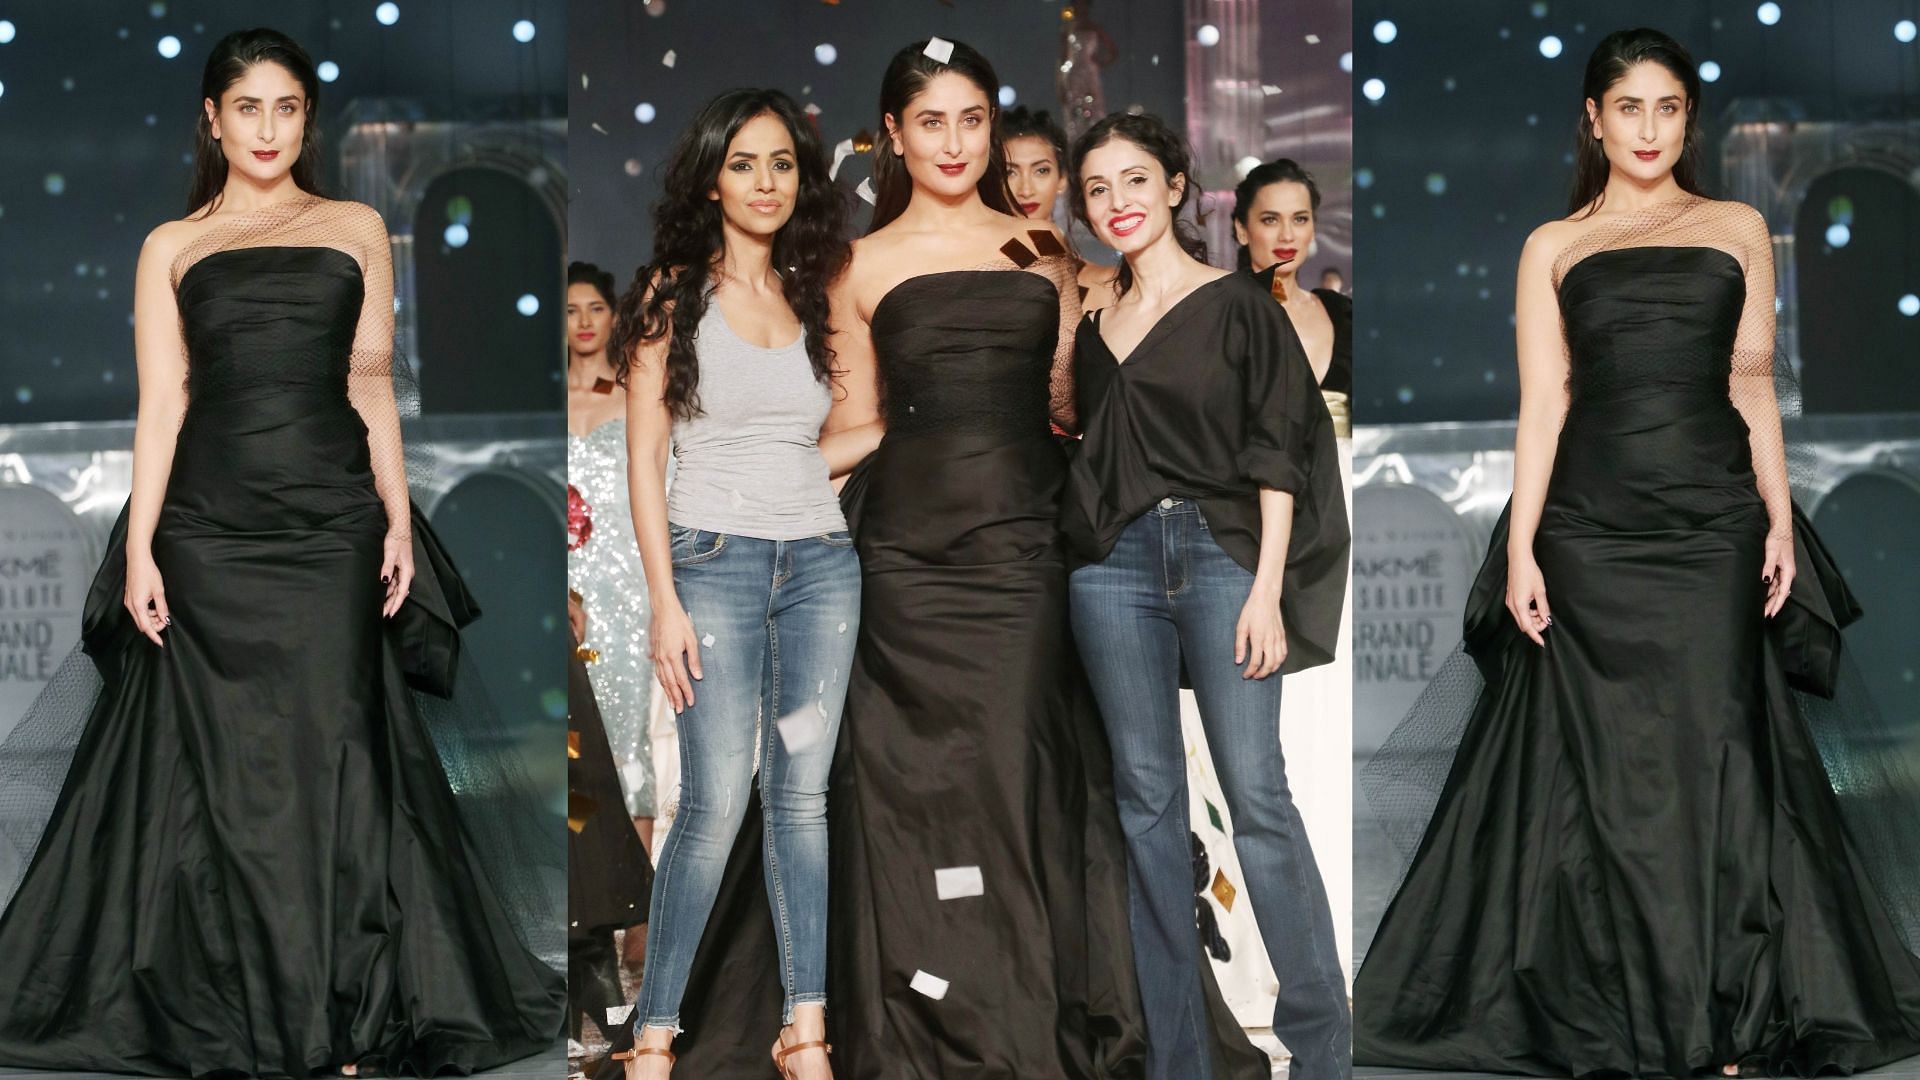 Kareena Kapoor Khan was the showstopper for designers Gauri and Nainika at the Lakme Fashion Week 2019.